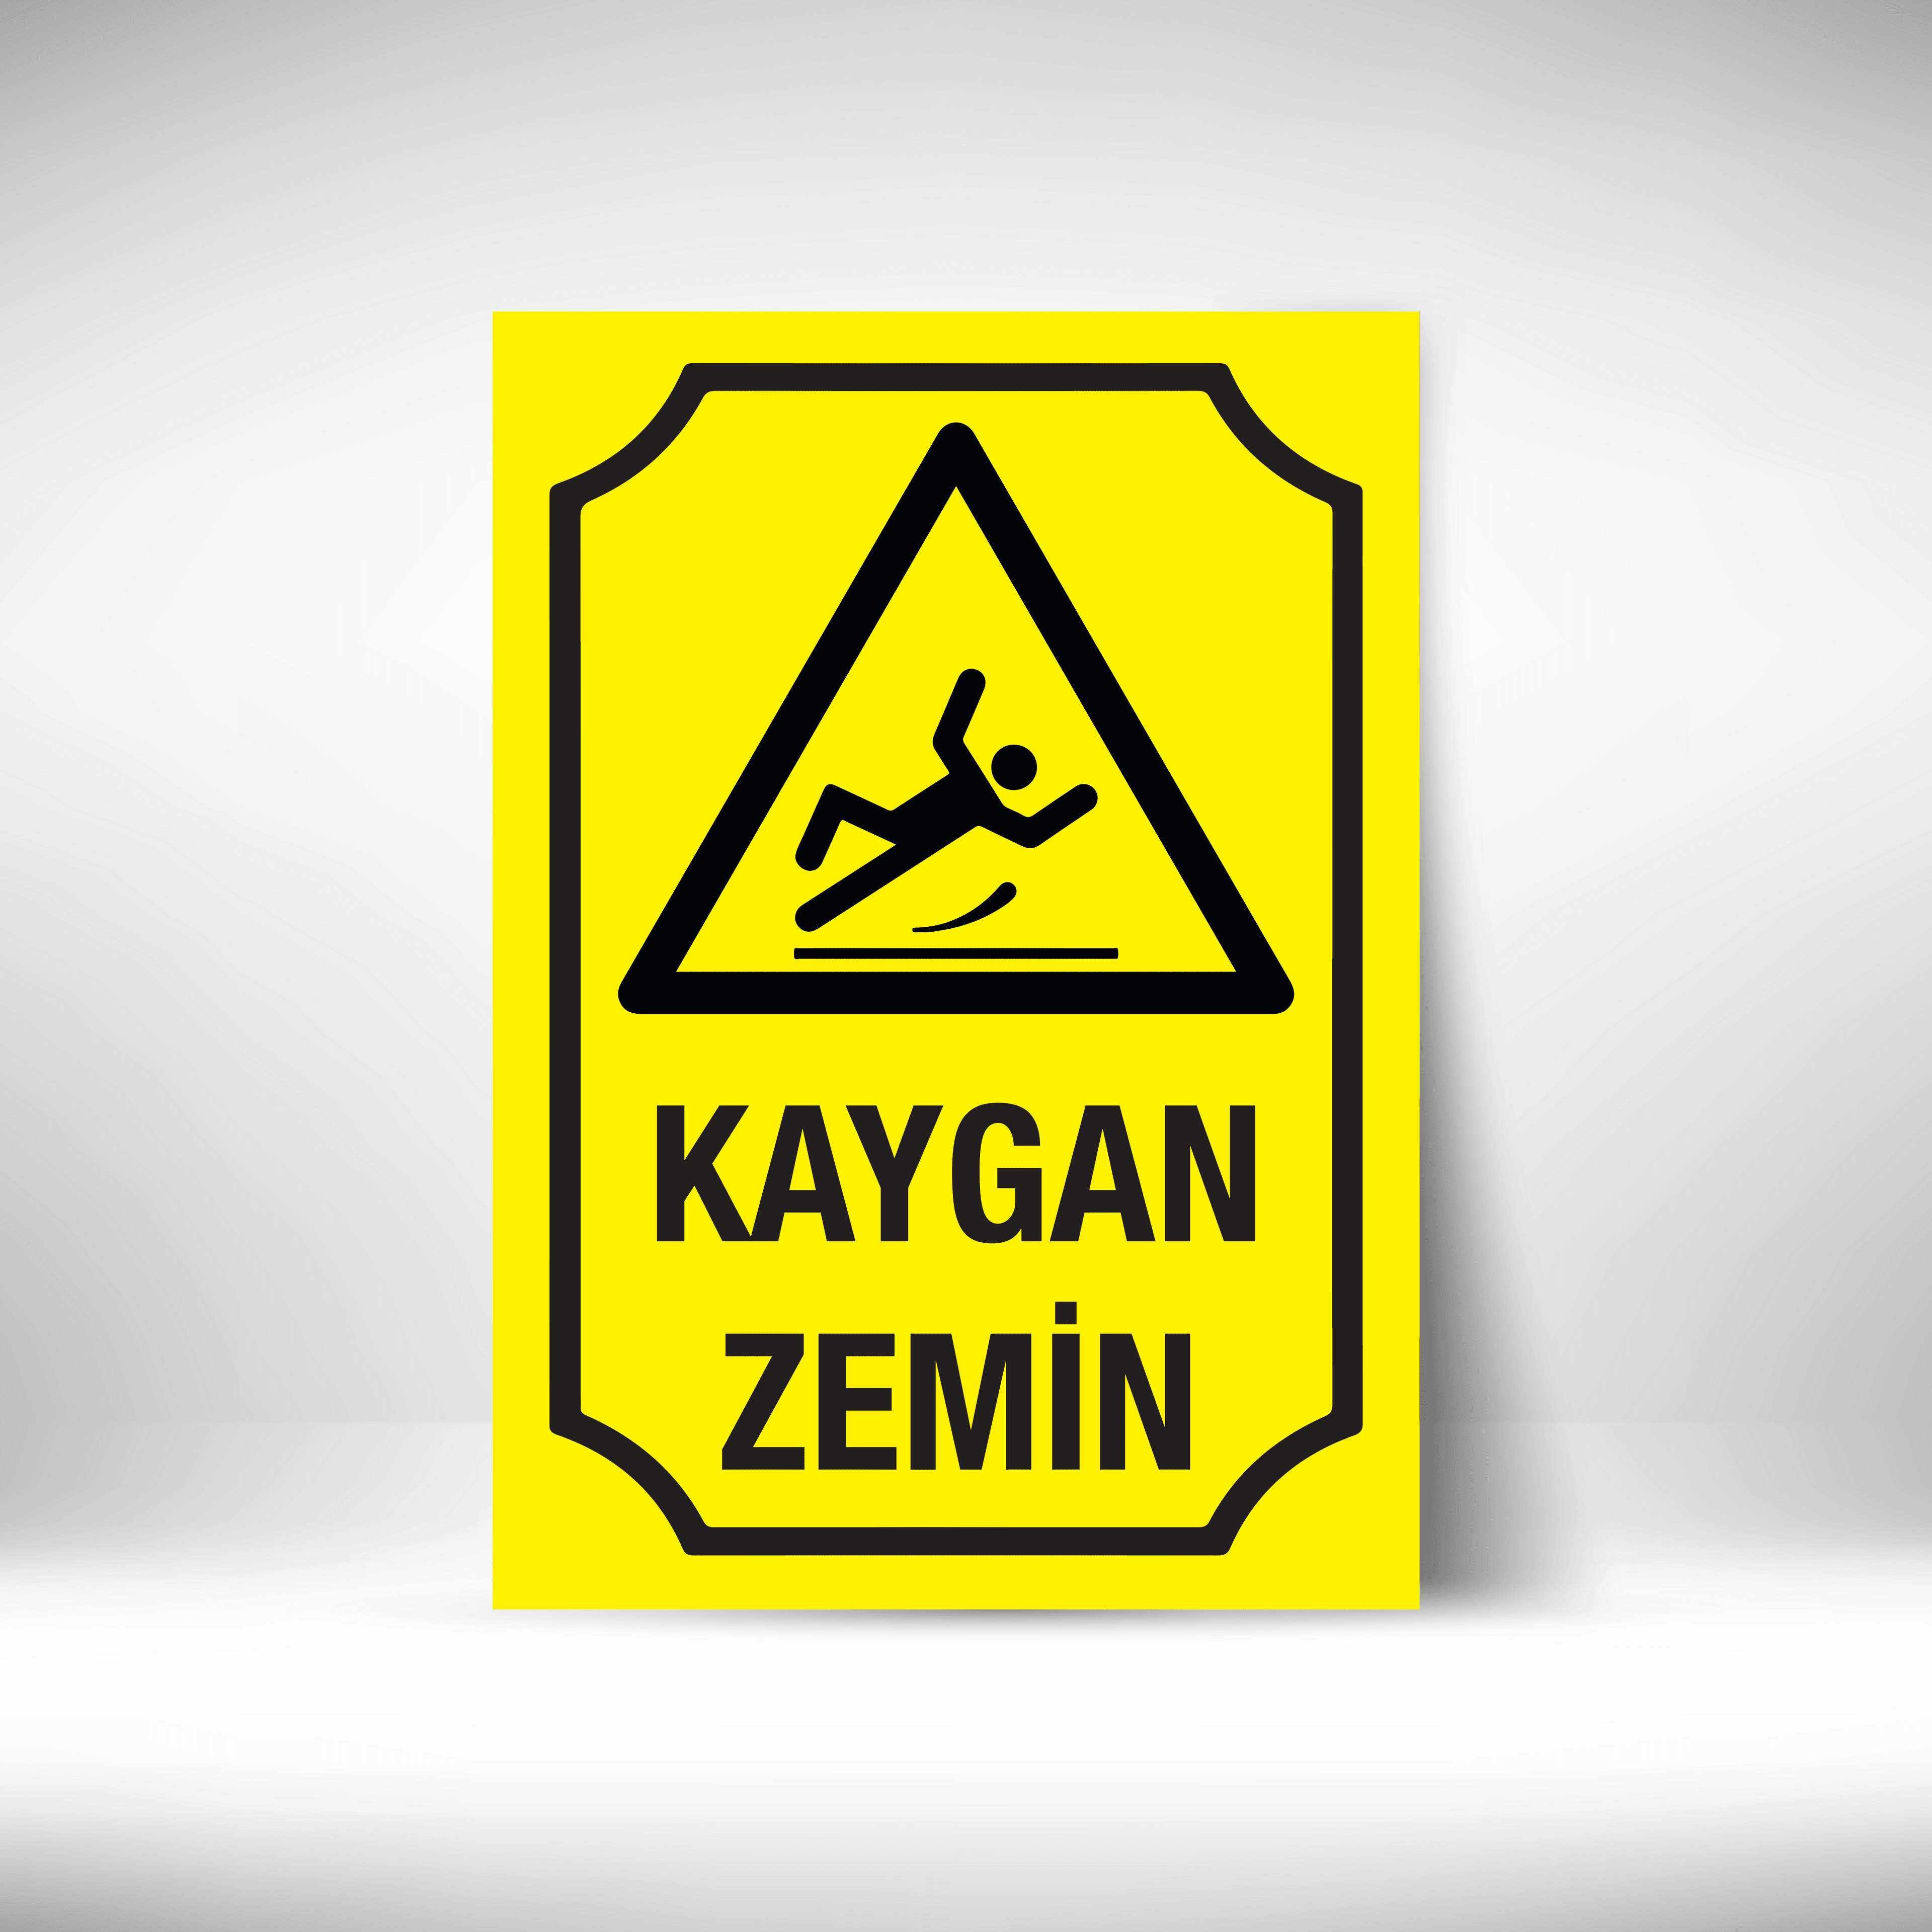 Kaygan Zemin image